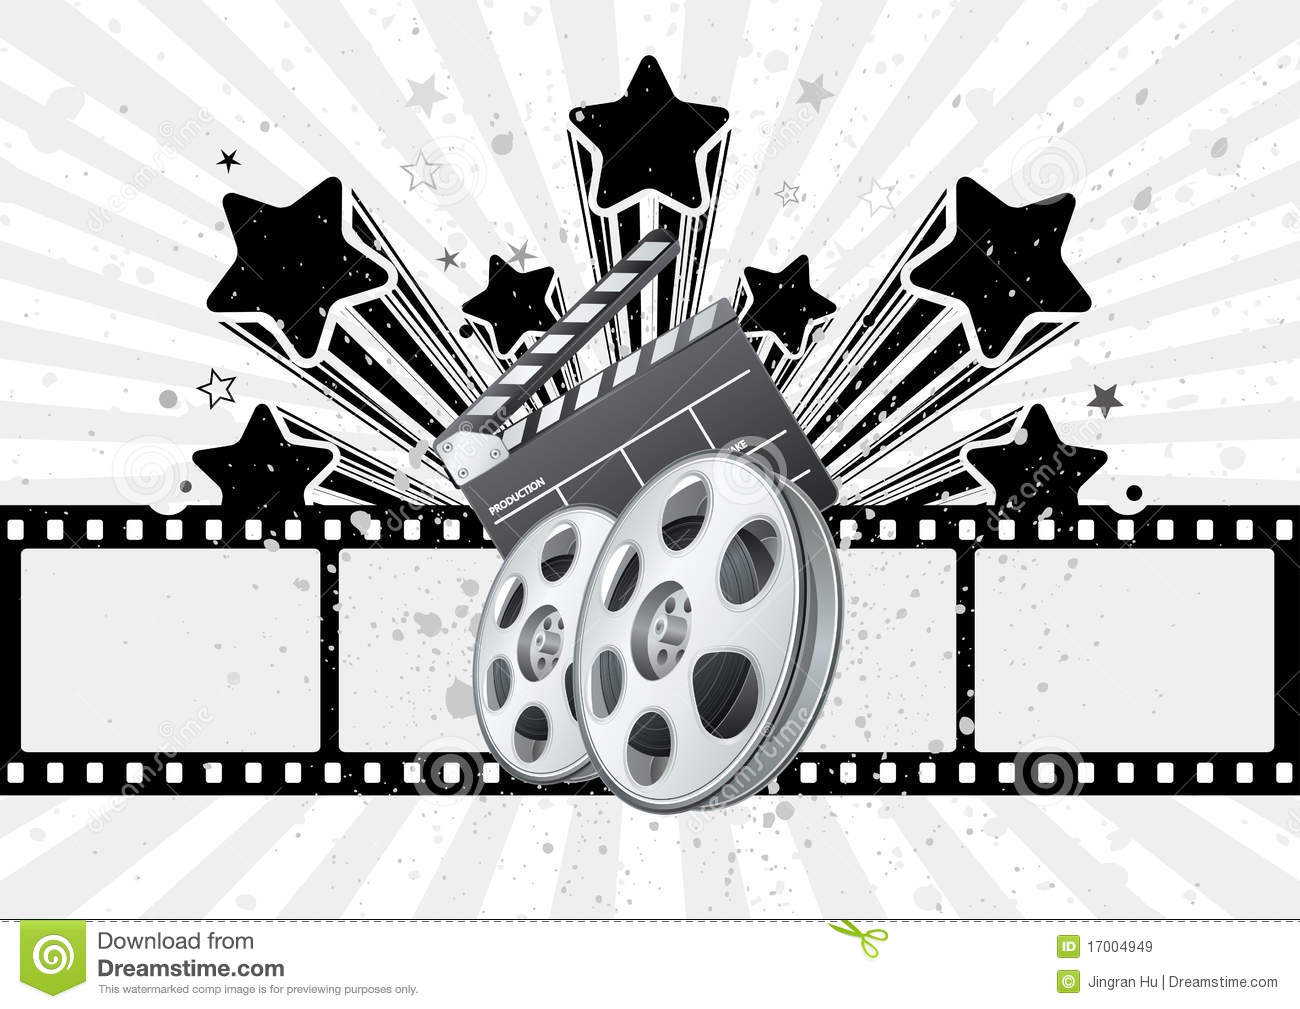 Movie Theme Illustration Royalty Free Stock Images   Image  17004949